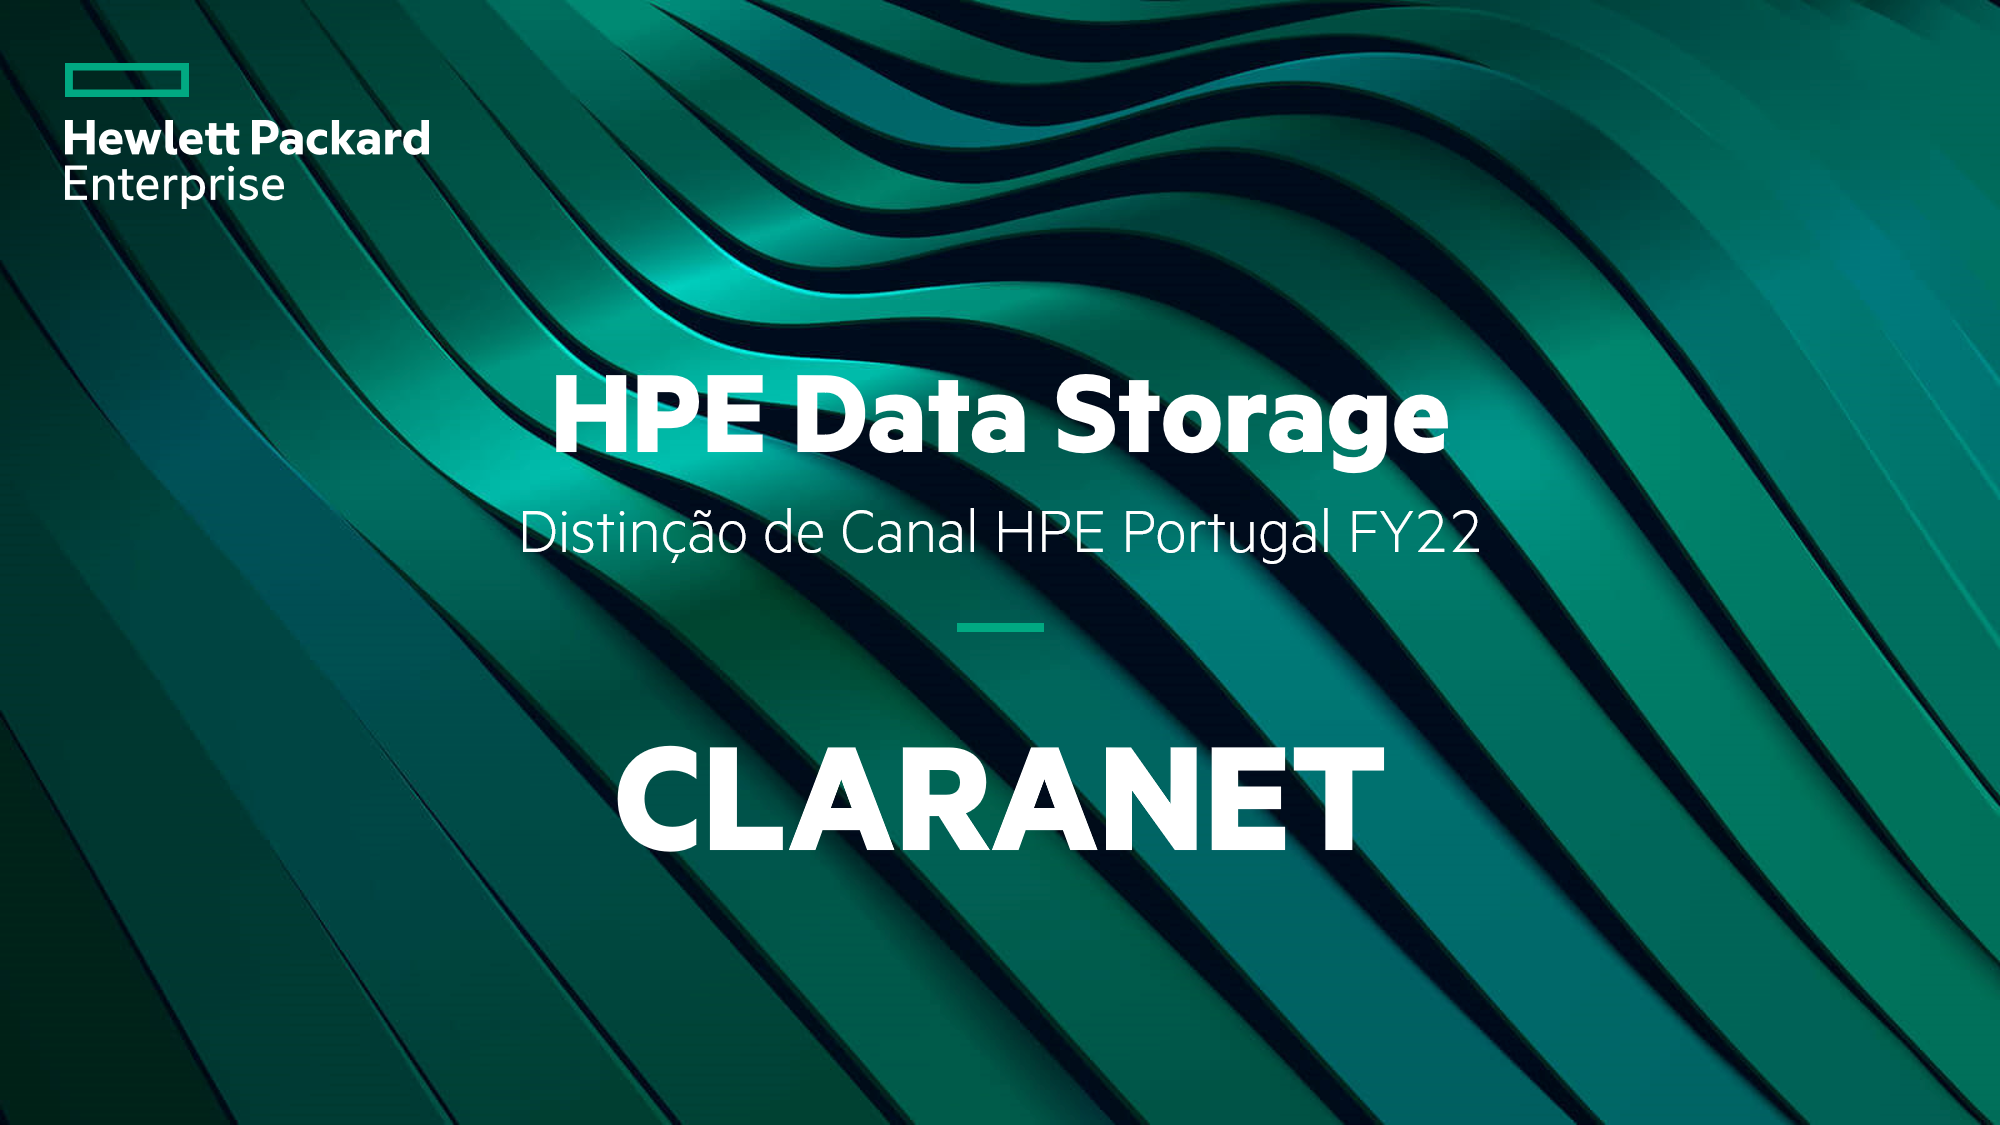 HPE Data Storage - Claranet